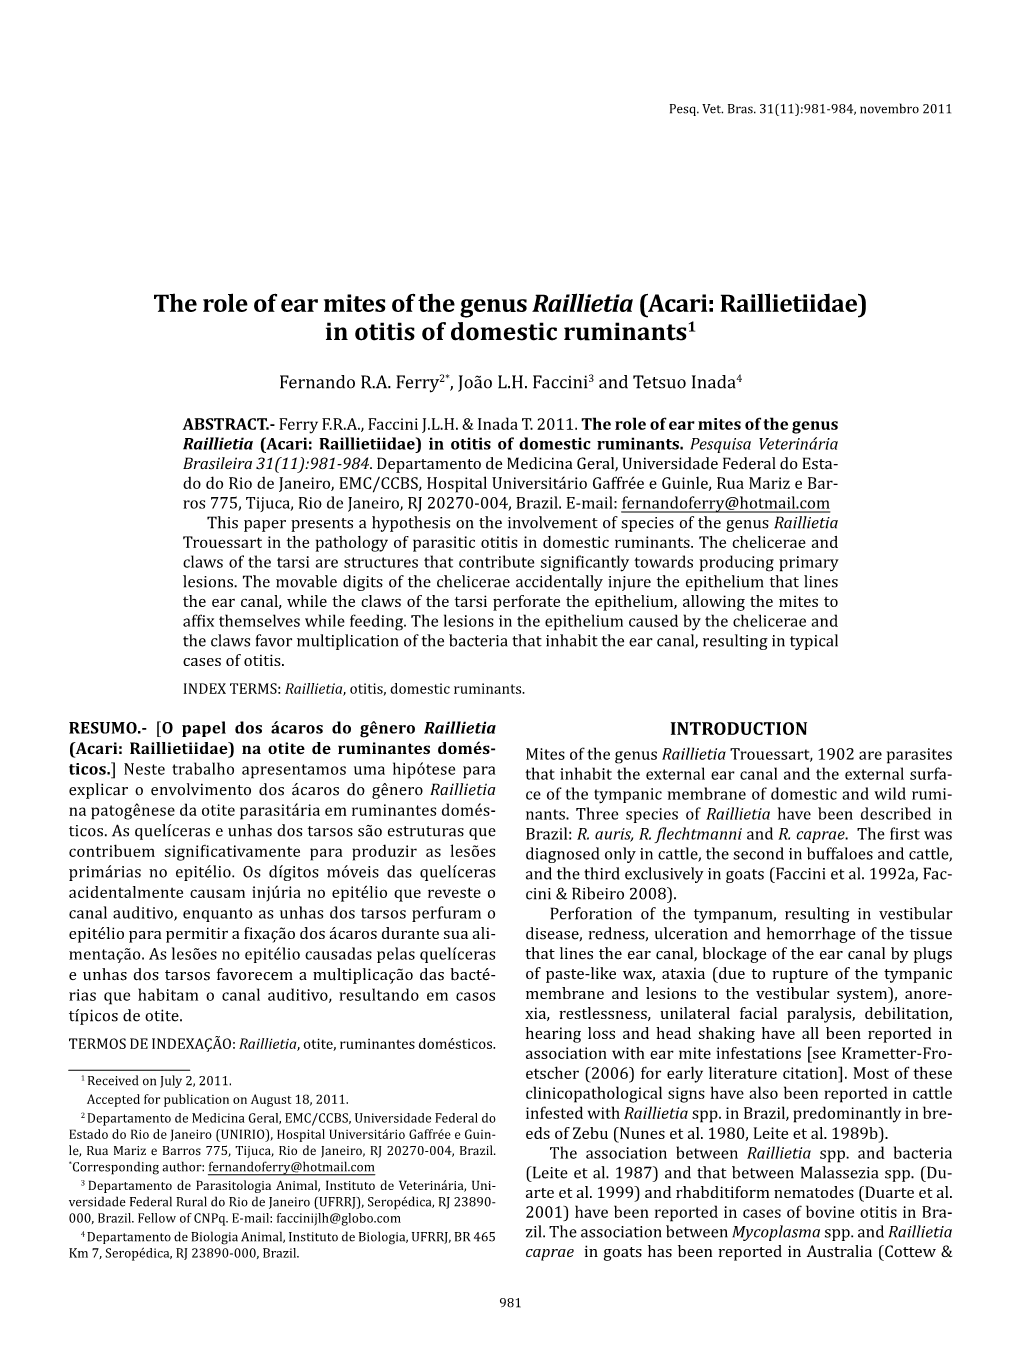 The Role of Ear Mites of the Genus Raillietia (Acari: Raillietiidae) in Otitis of Domestic Ruminants1